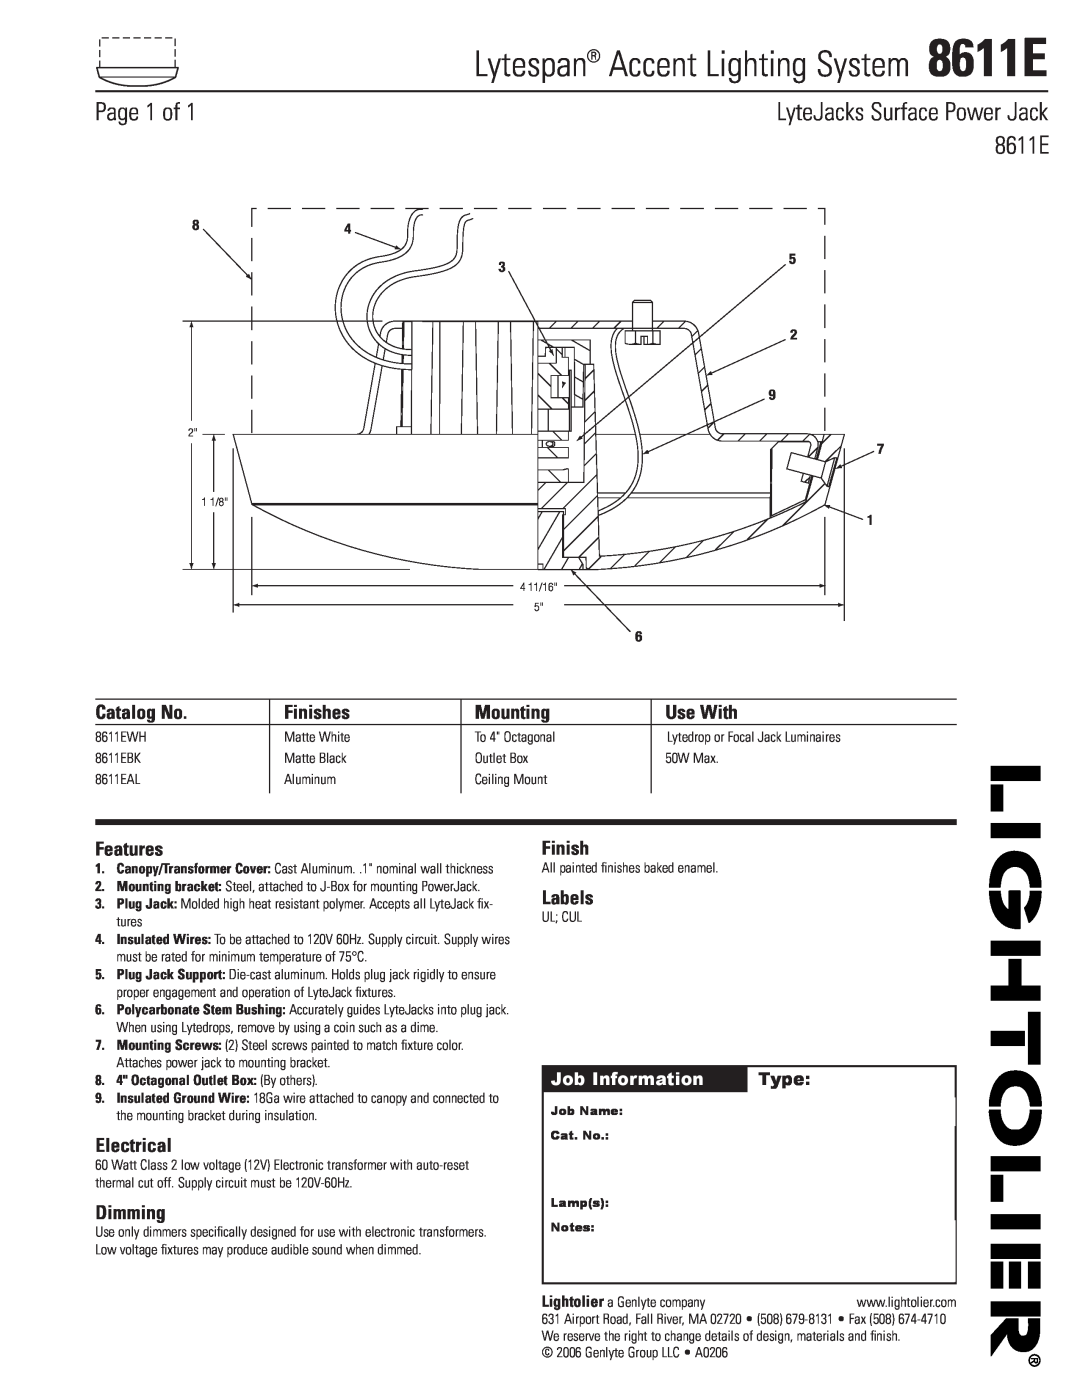 Lightolier manual Lytespan Accent Lighting System 8611E, Page 1 of, LyteJacks Surface Power Jack, Finishes, Mounting 